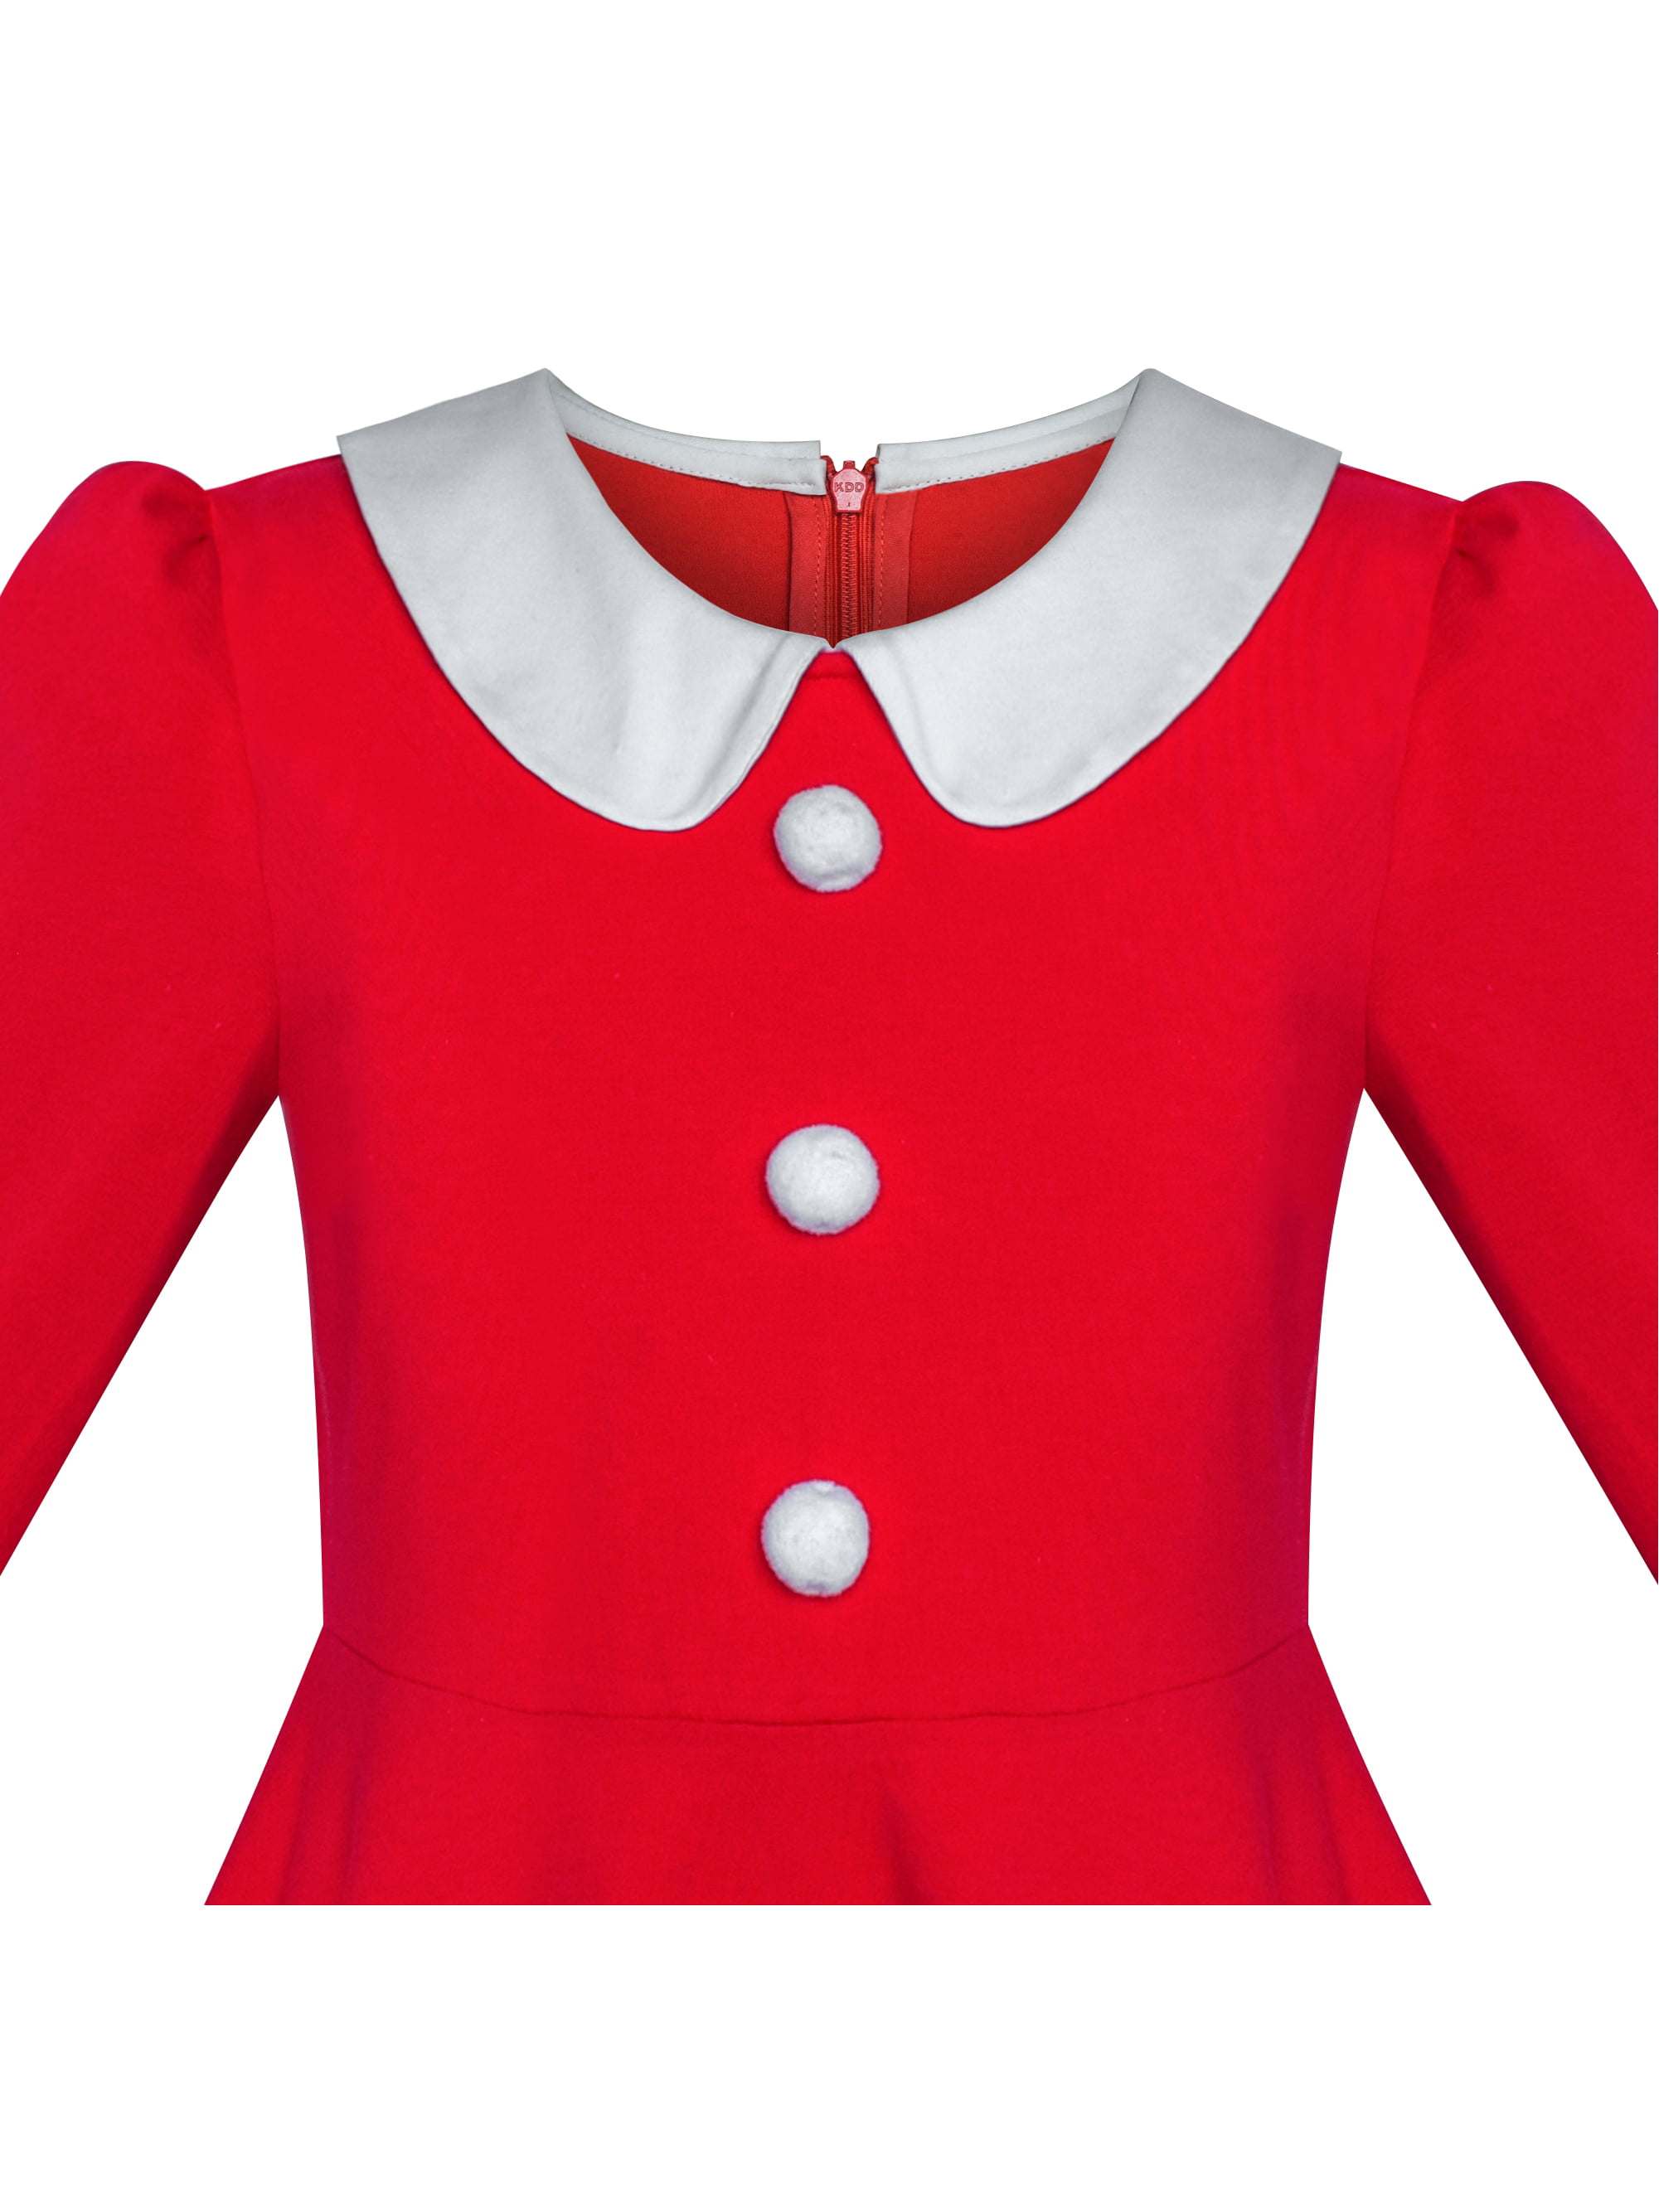 Sunny Fashion Girls Dress Christmas Hat Red Velvet Long Sleeve Holiday Size 4-14 